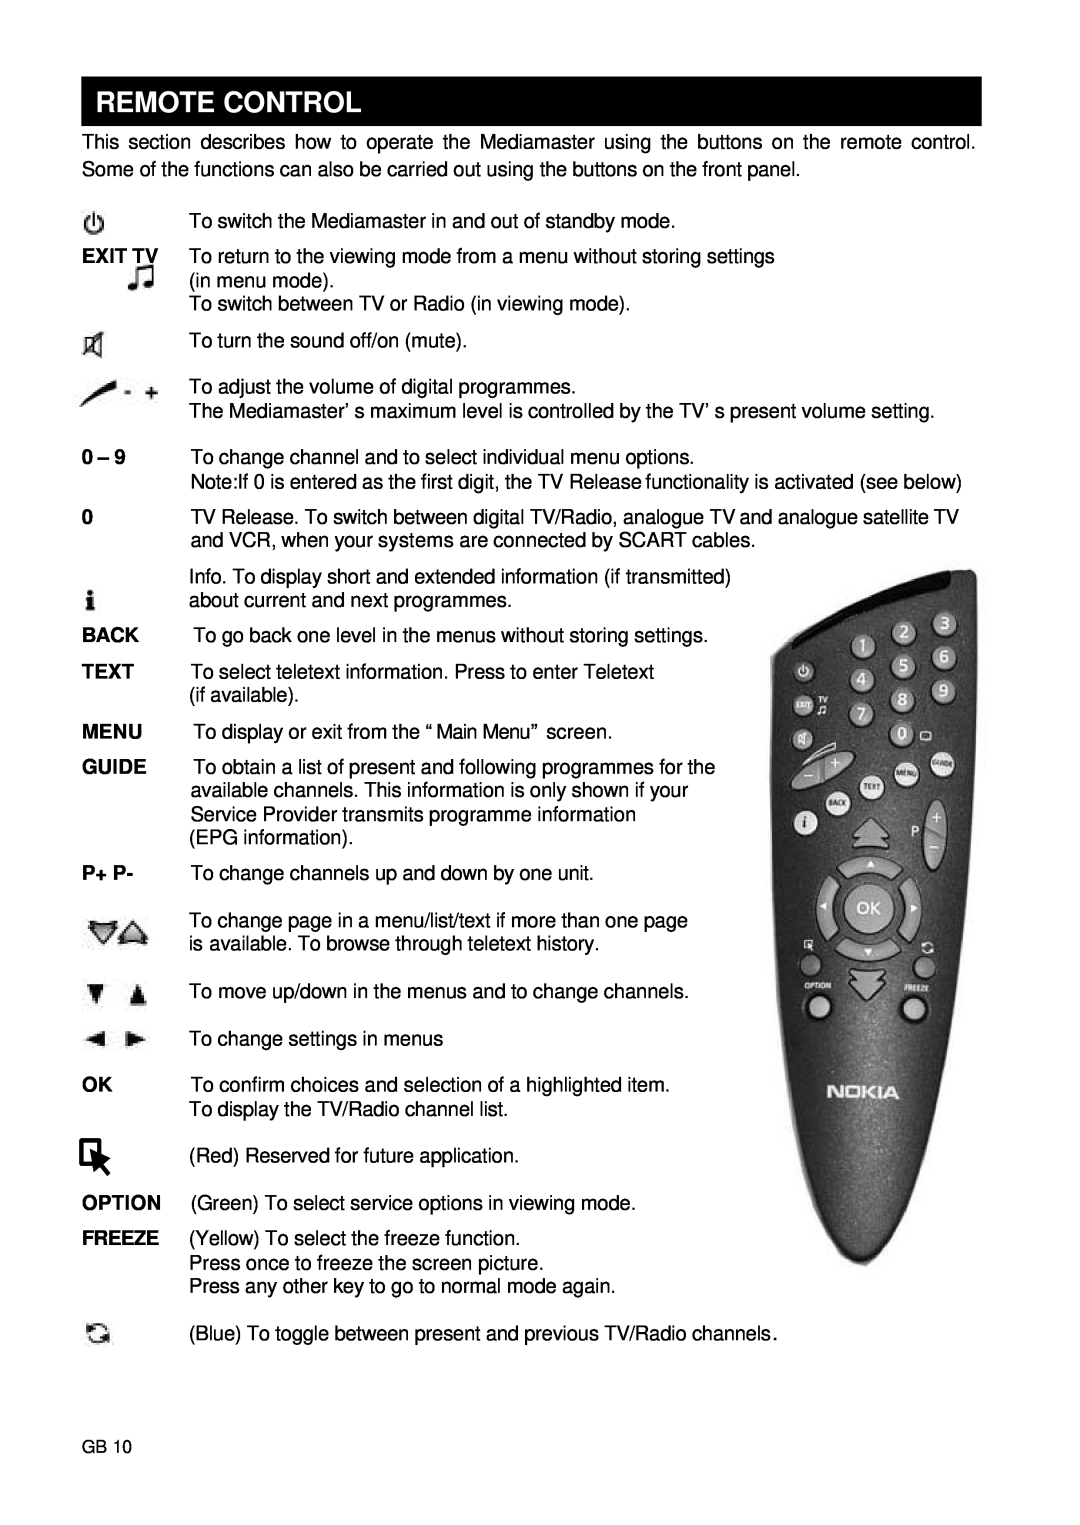 Nokia 9660S owner manual Remote Control, Exit Tv, Back, Text, Menu, Guide, P+ P, Freeze 